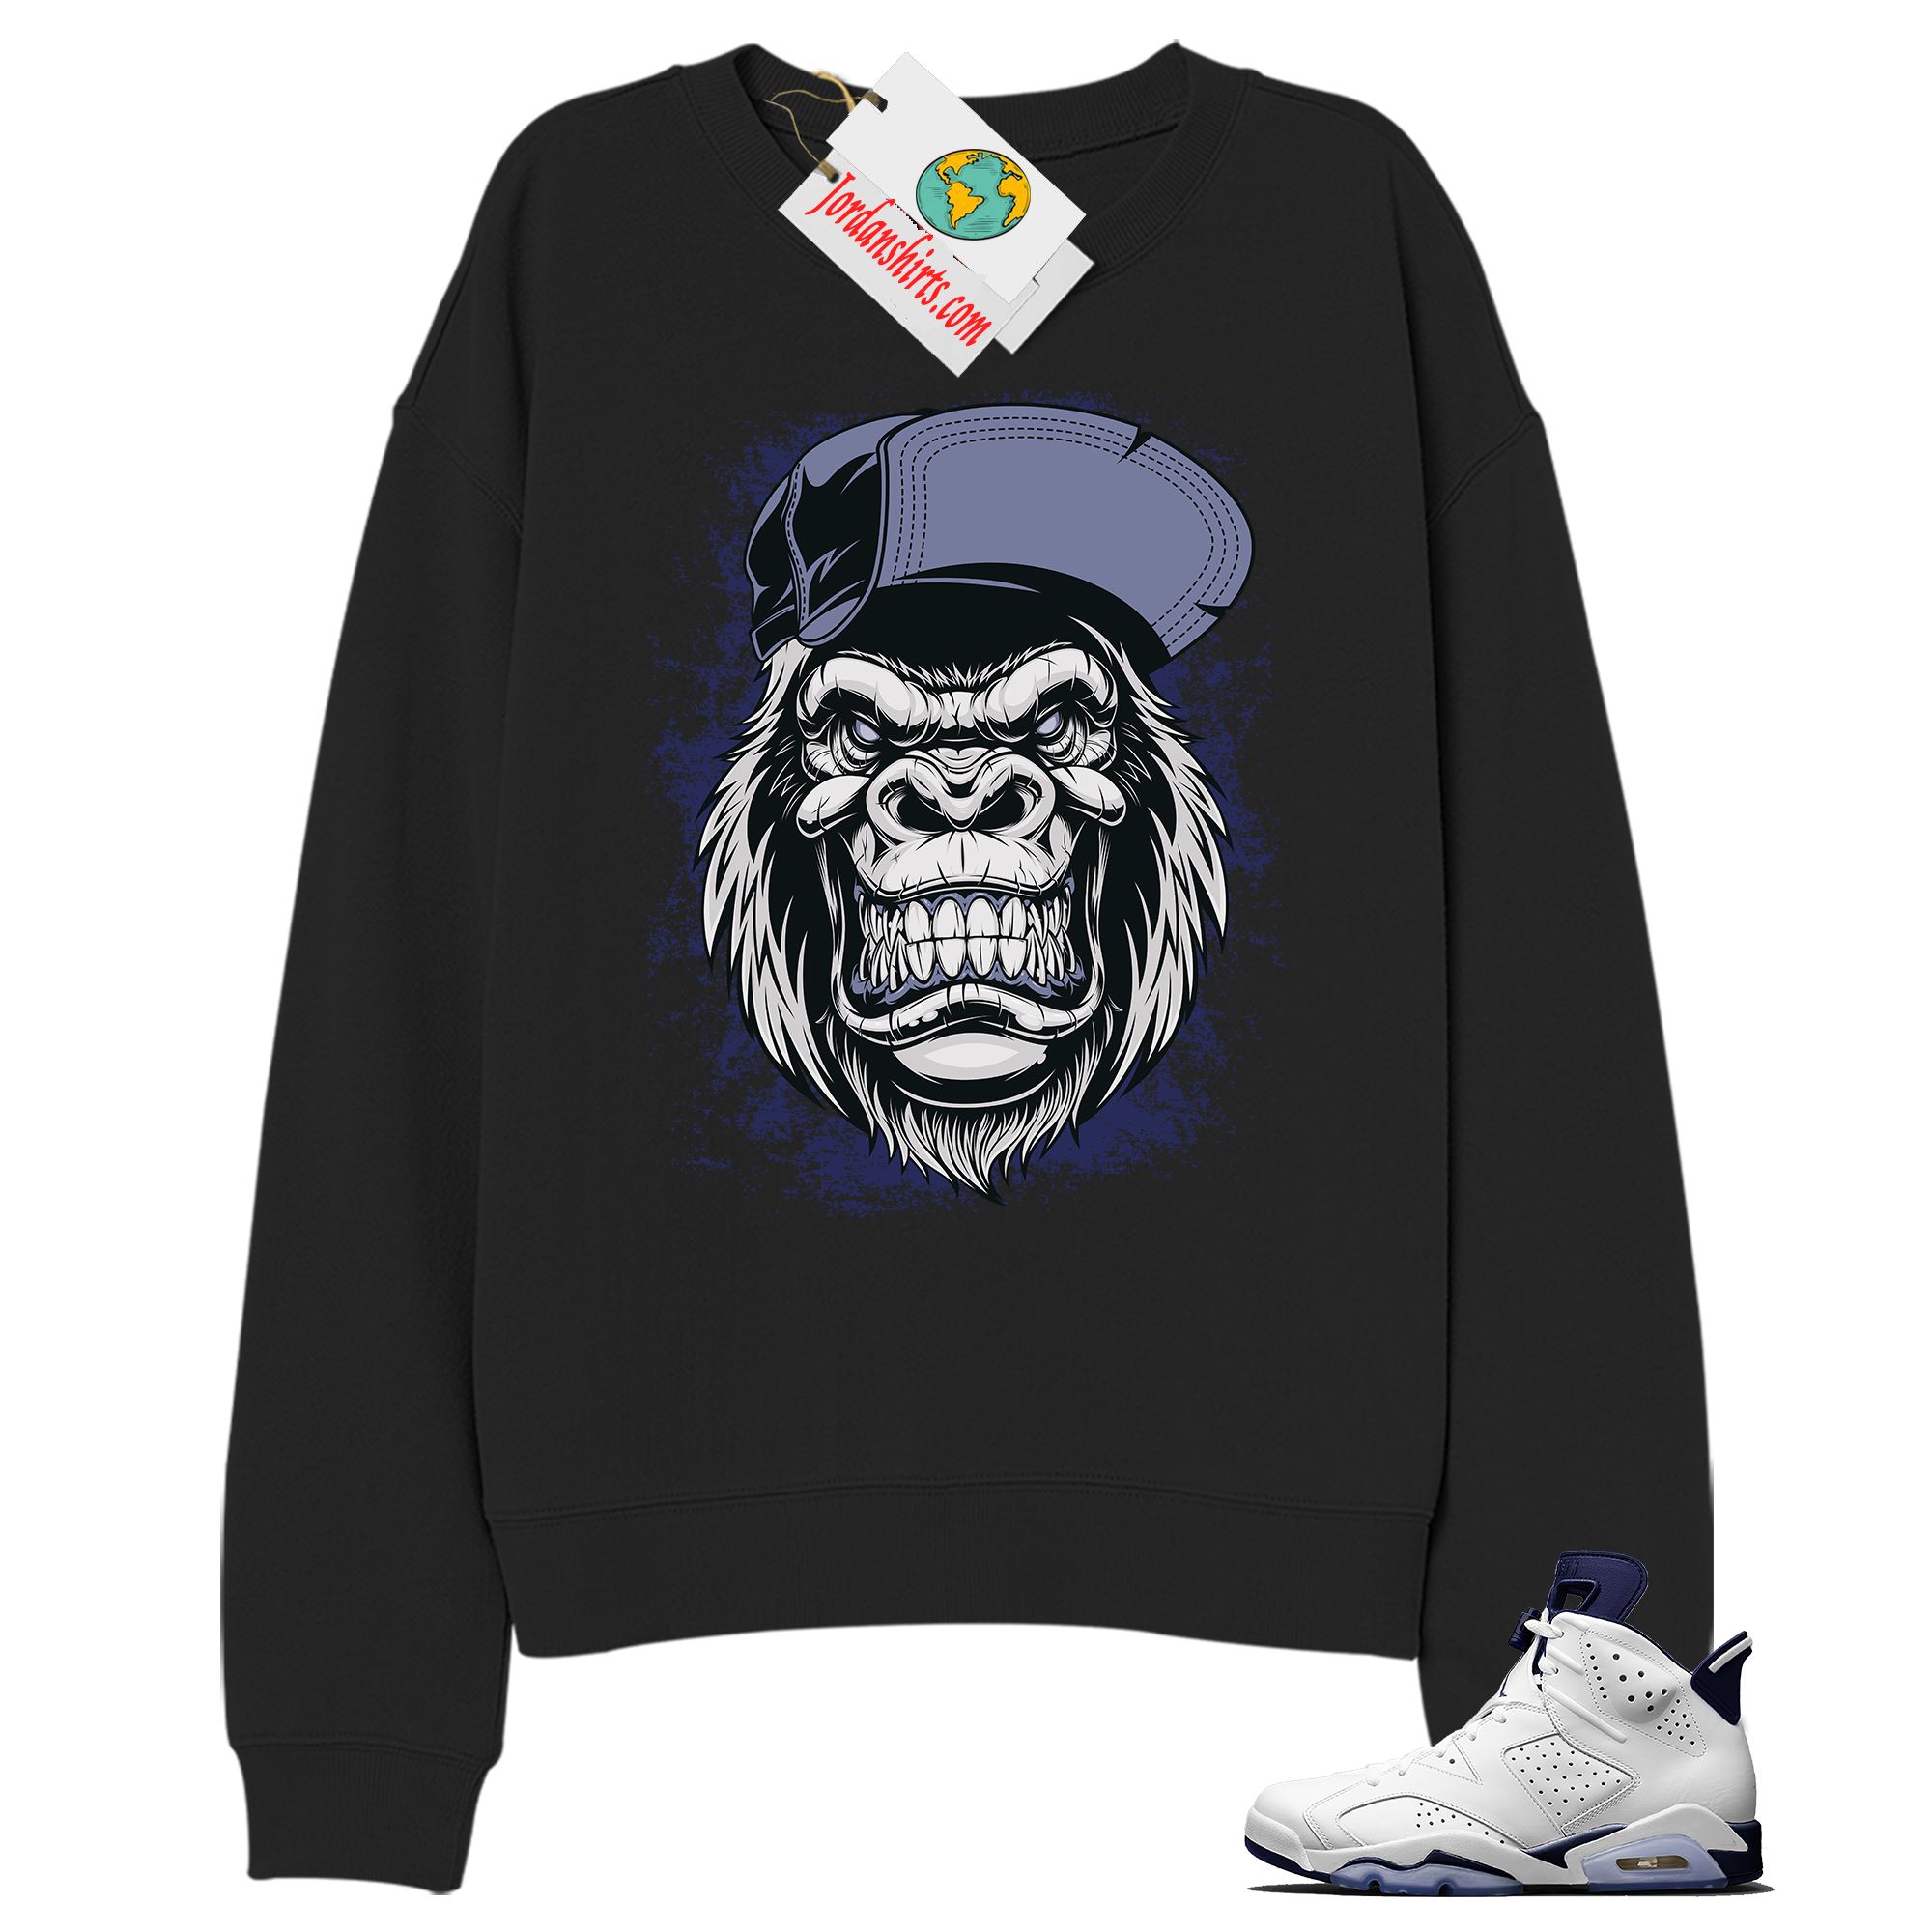 Jordan 6 Sweatshirt, Ferocious Gorilla Black Sweatshirt Air Jordan 6 Midnight Navy 6s Full Size Up To 5xl